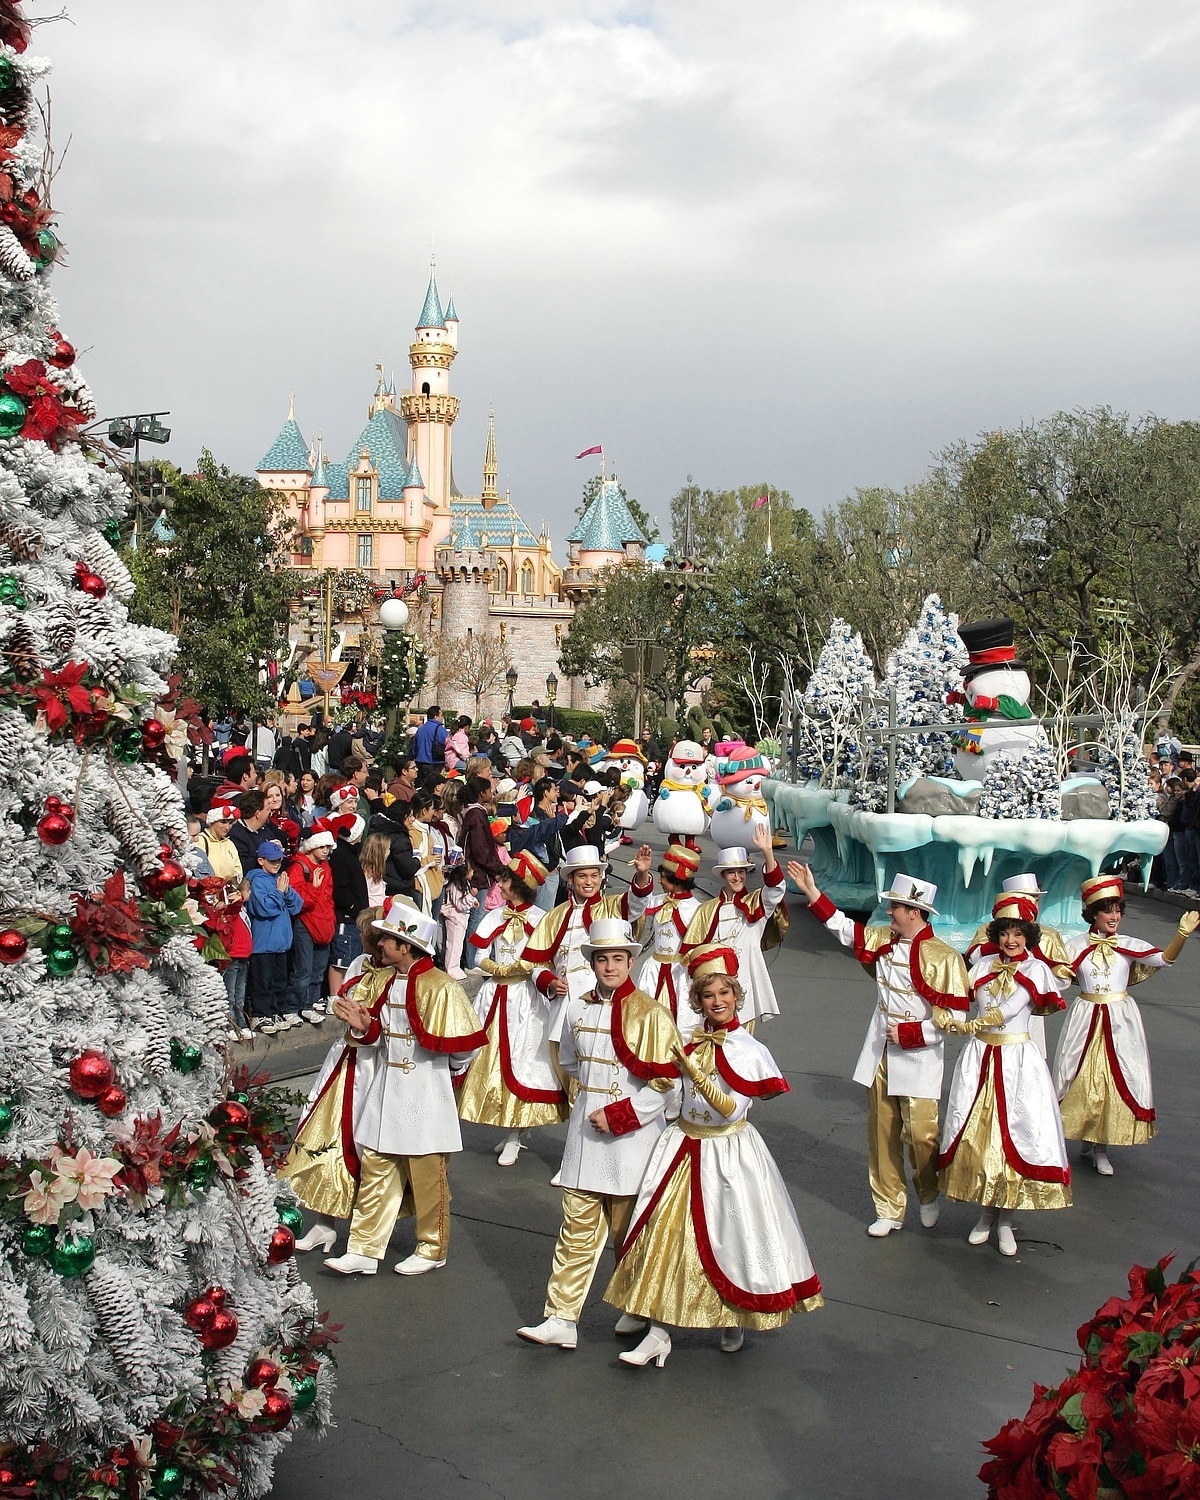 "A Christmas Fantasy" Disneyland Holiday Parade